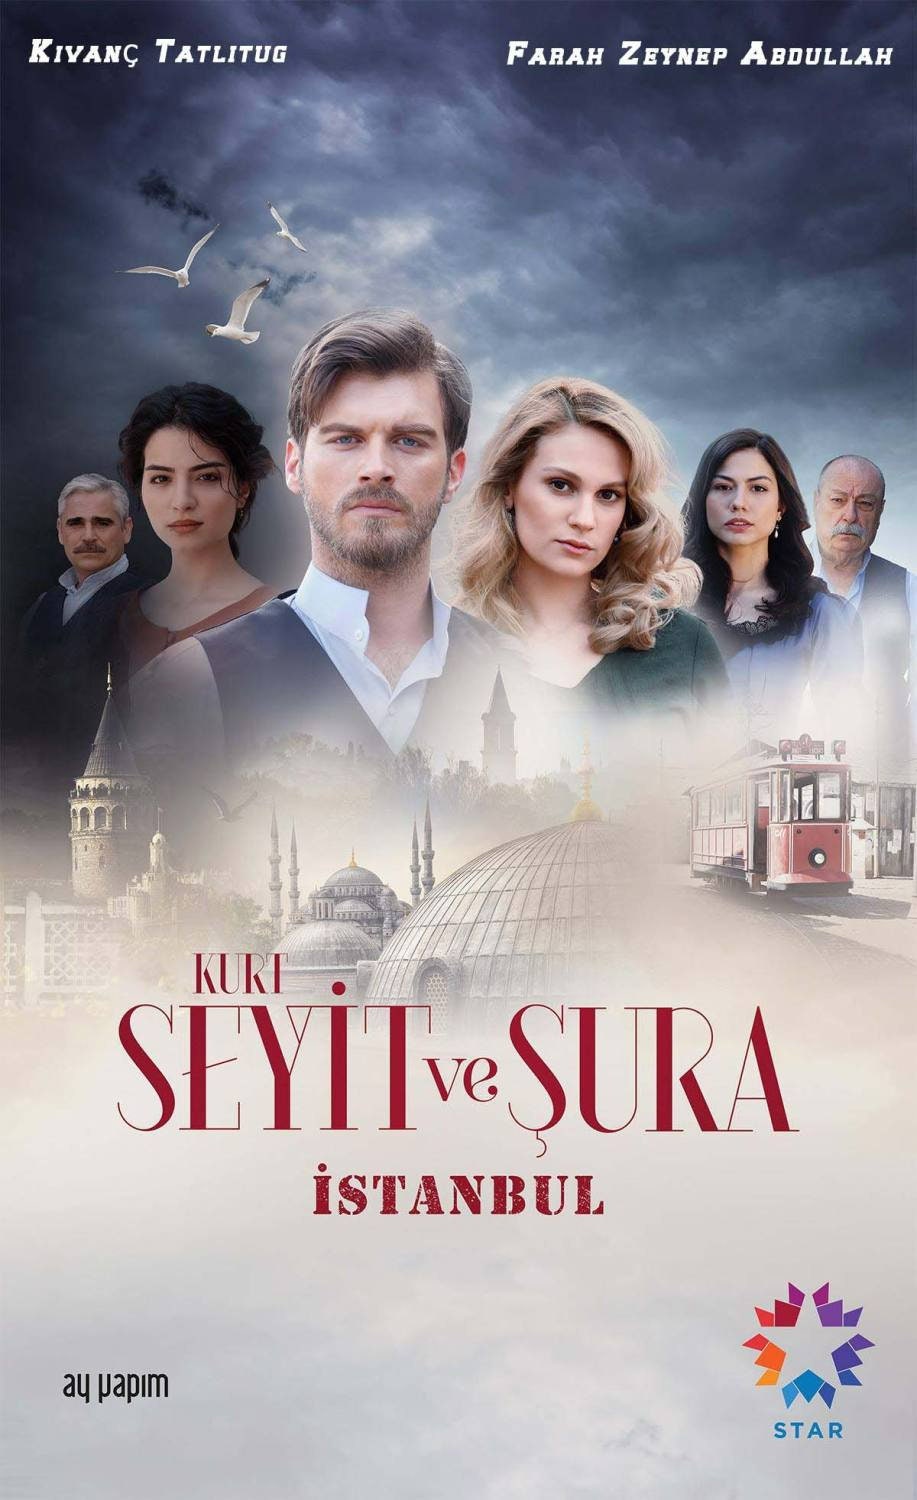 Kurt Seyit and Suhra Kivanc Tatlitug Tv Series Turkish Actor Voices English-Arabic-Italian-Spanish-Deutsch Subtitles / Full HD No Ads